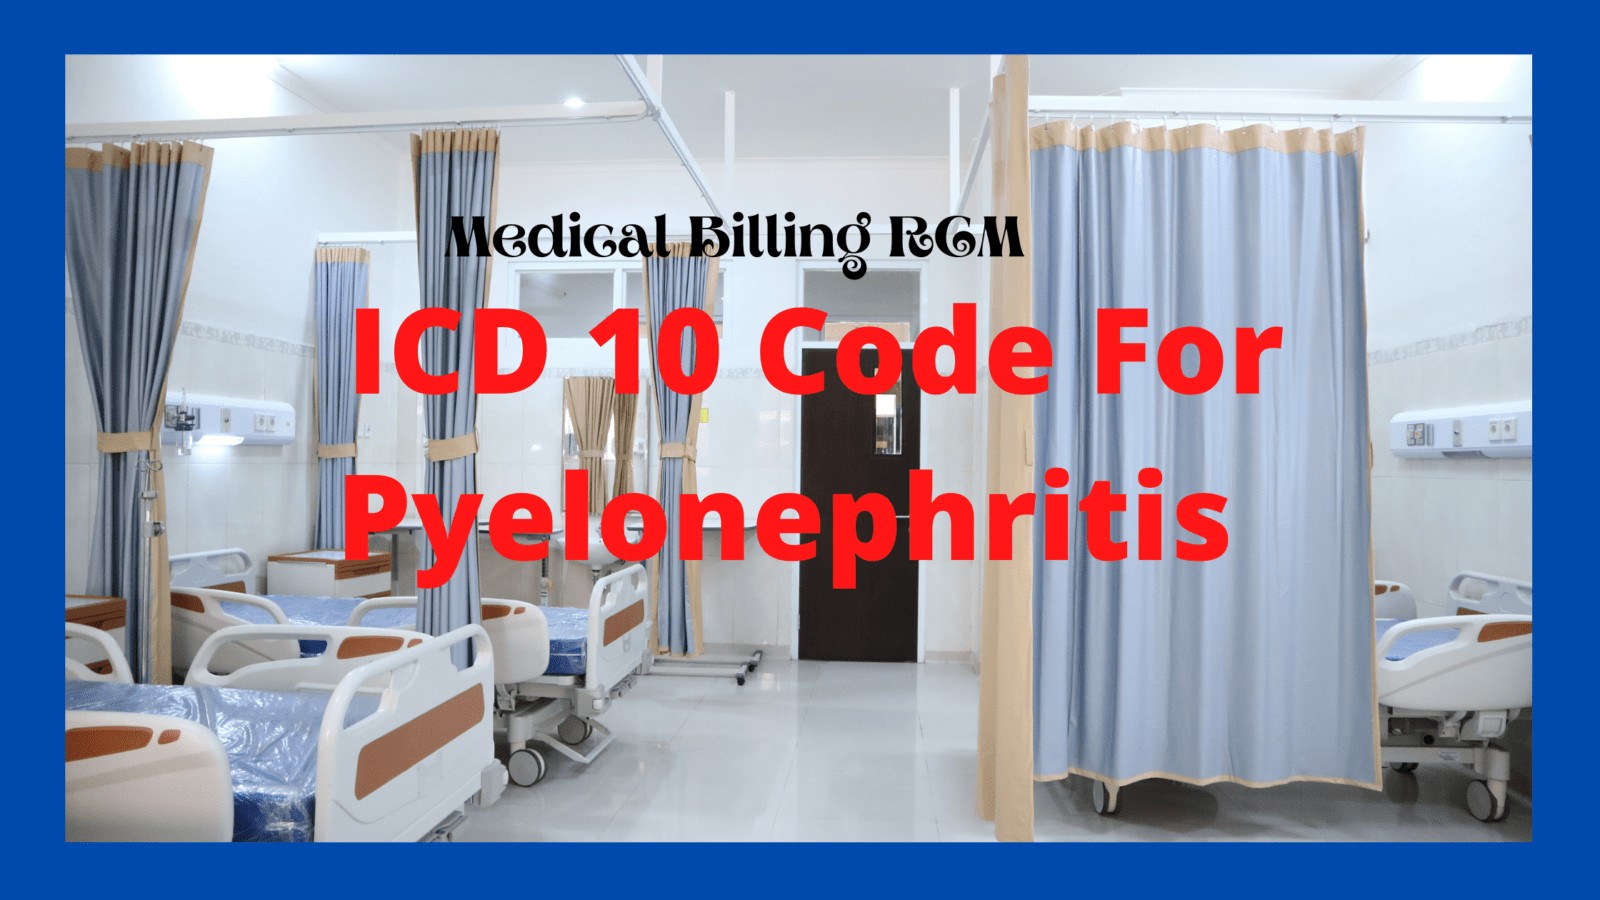 ICD 10 Code For Pyelonephritis